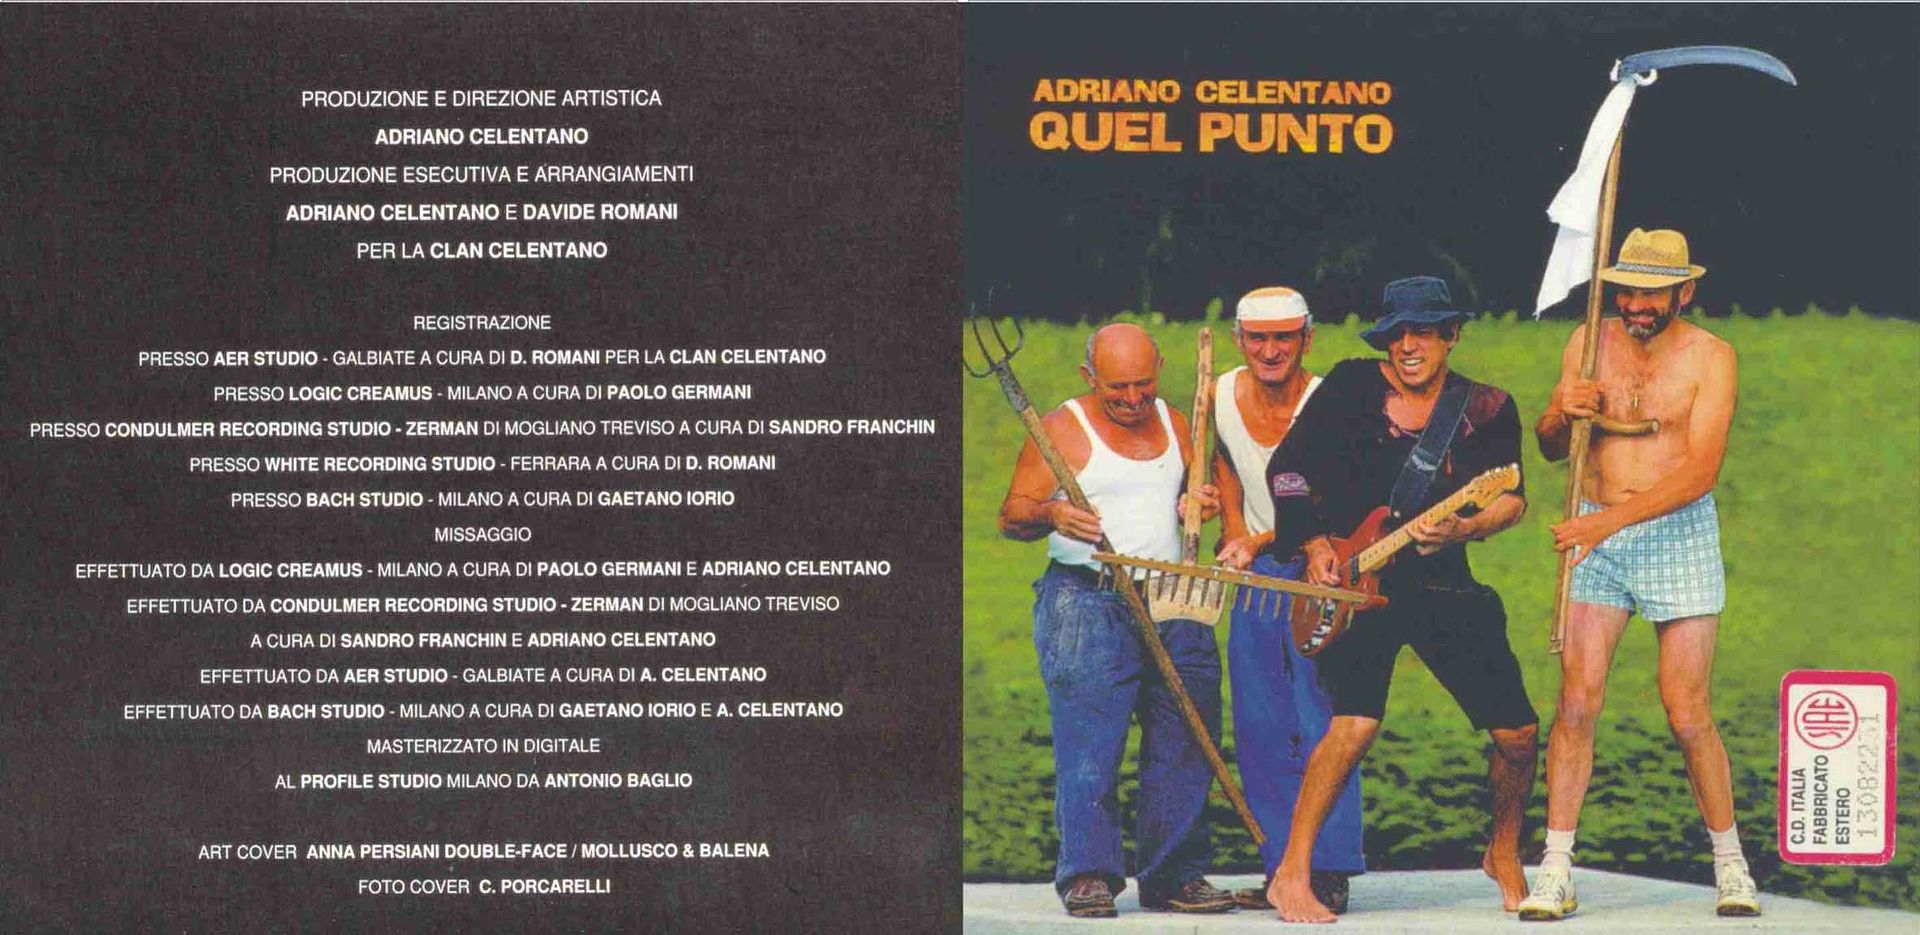 AdrianoCelentano QuelPuntofront - Adriano Celentano: Discografia